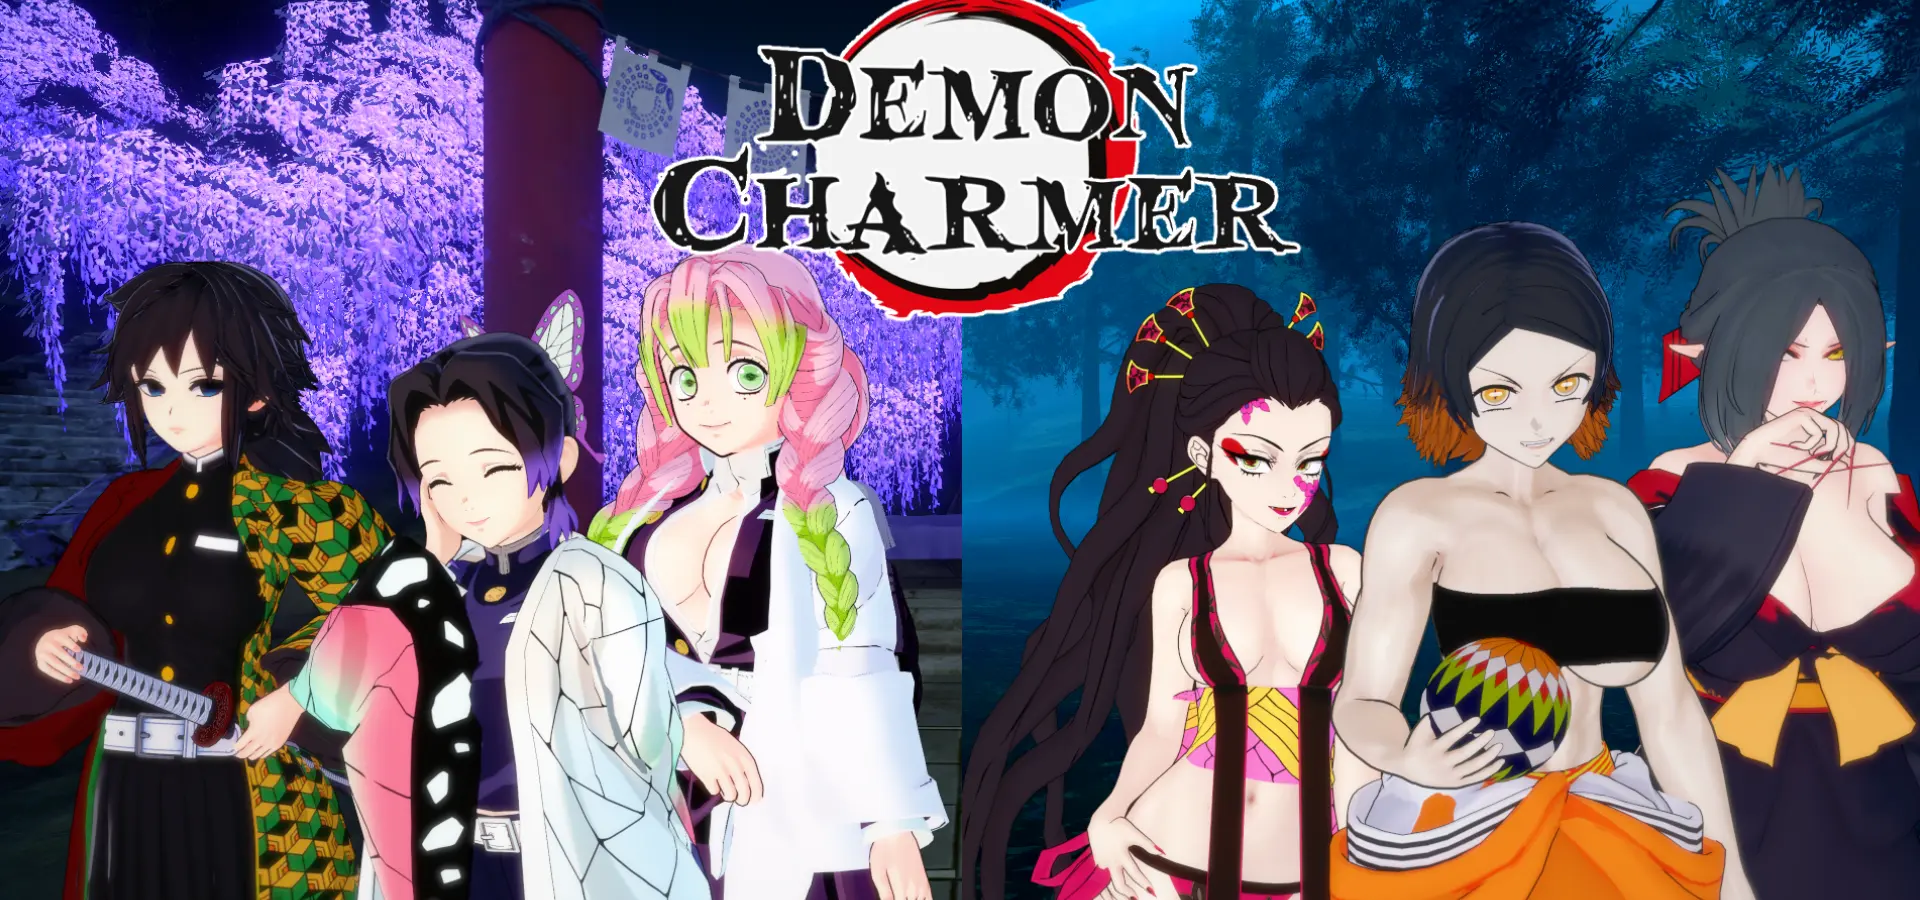 Demon Charmer main image